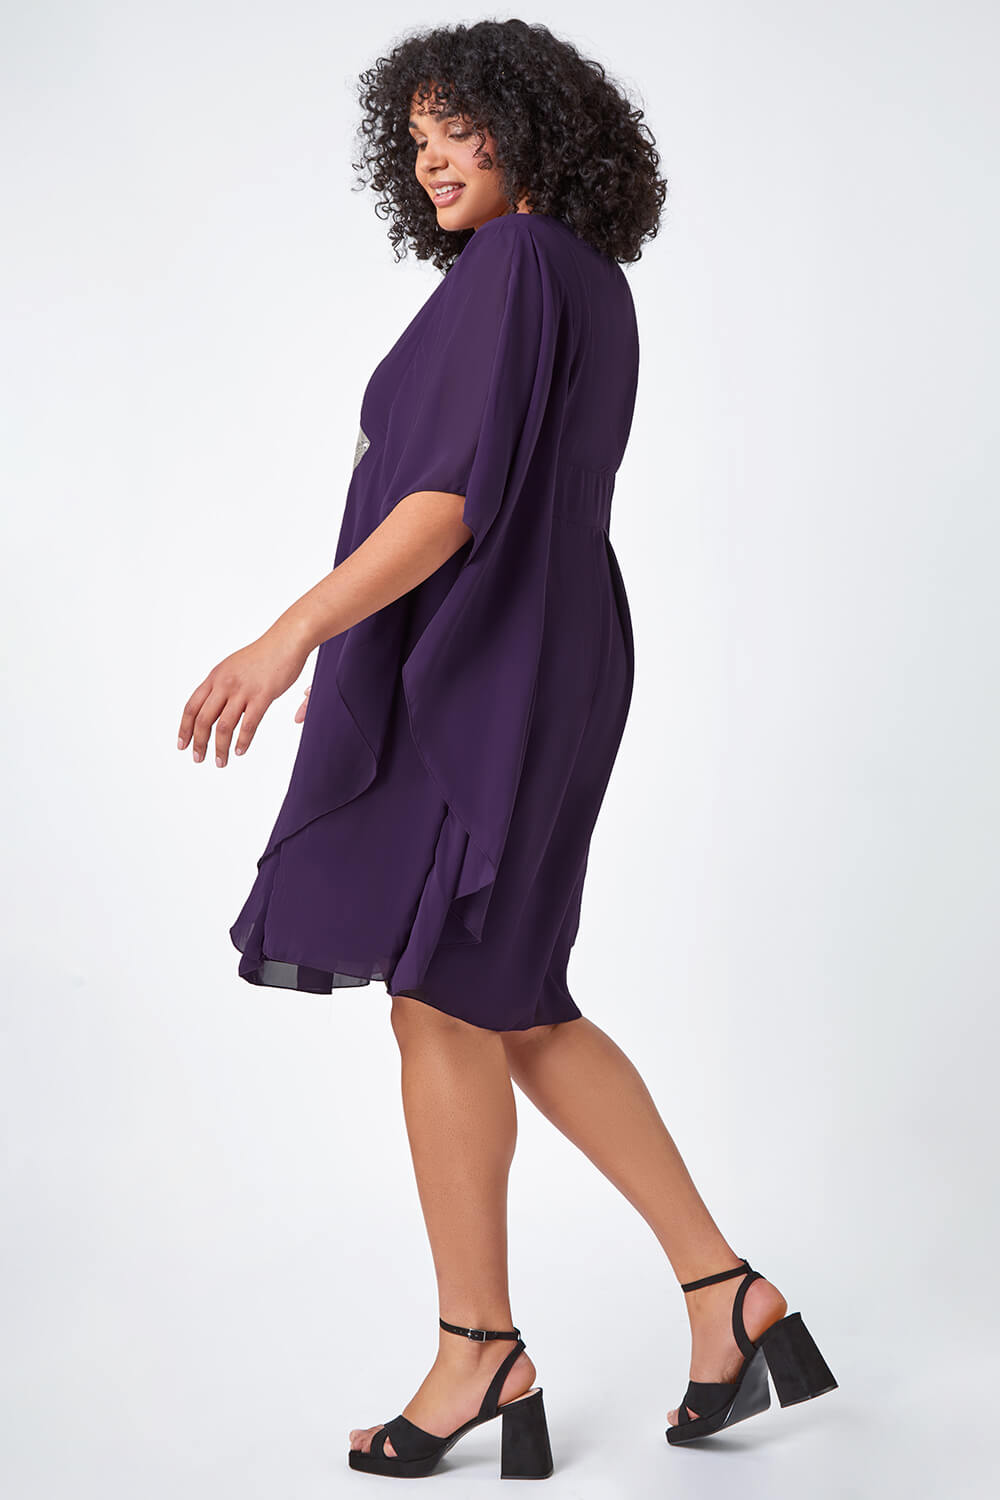 Purple Curve Embellished Chiffon Overlay Dress, Image 3 of 5